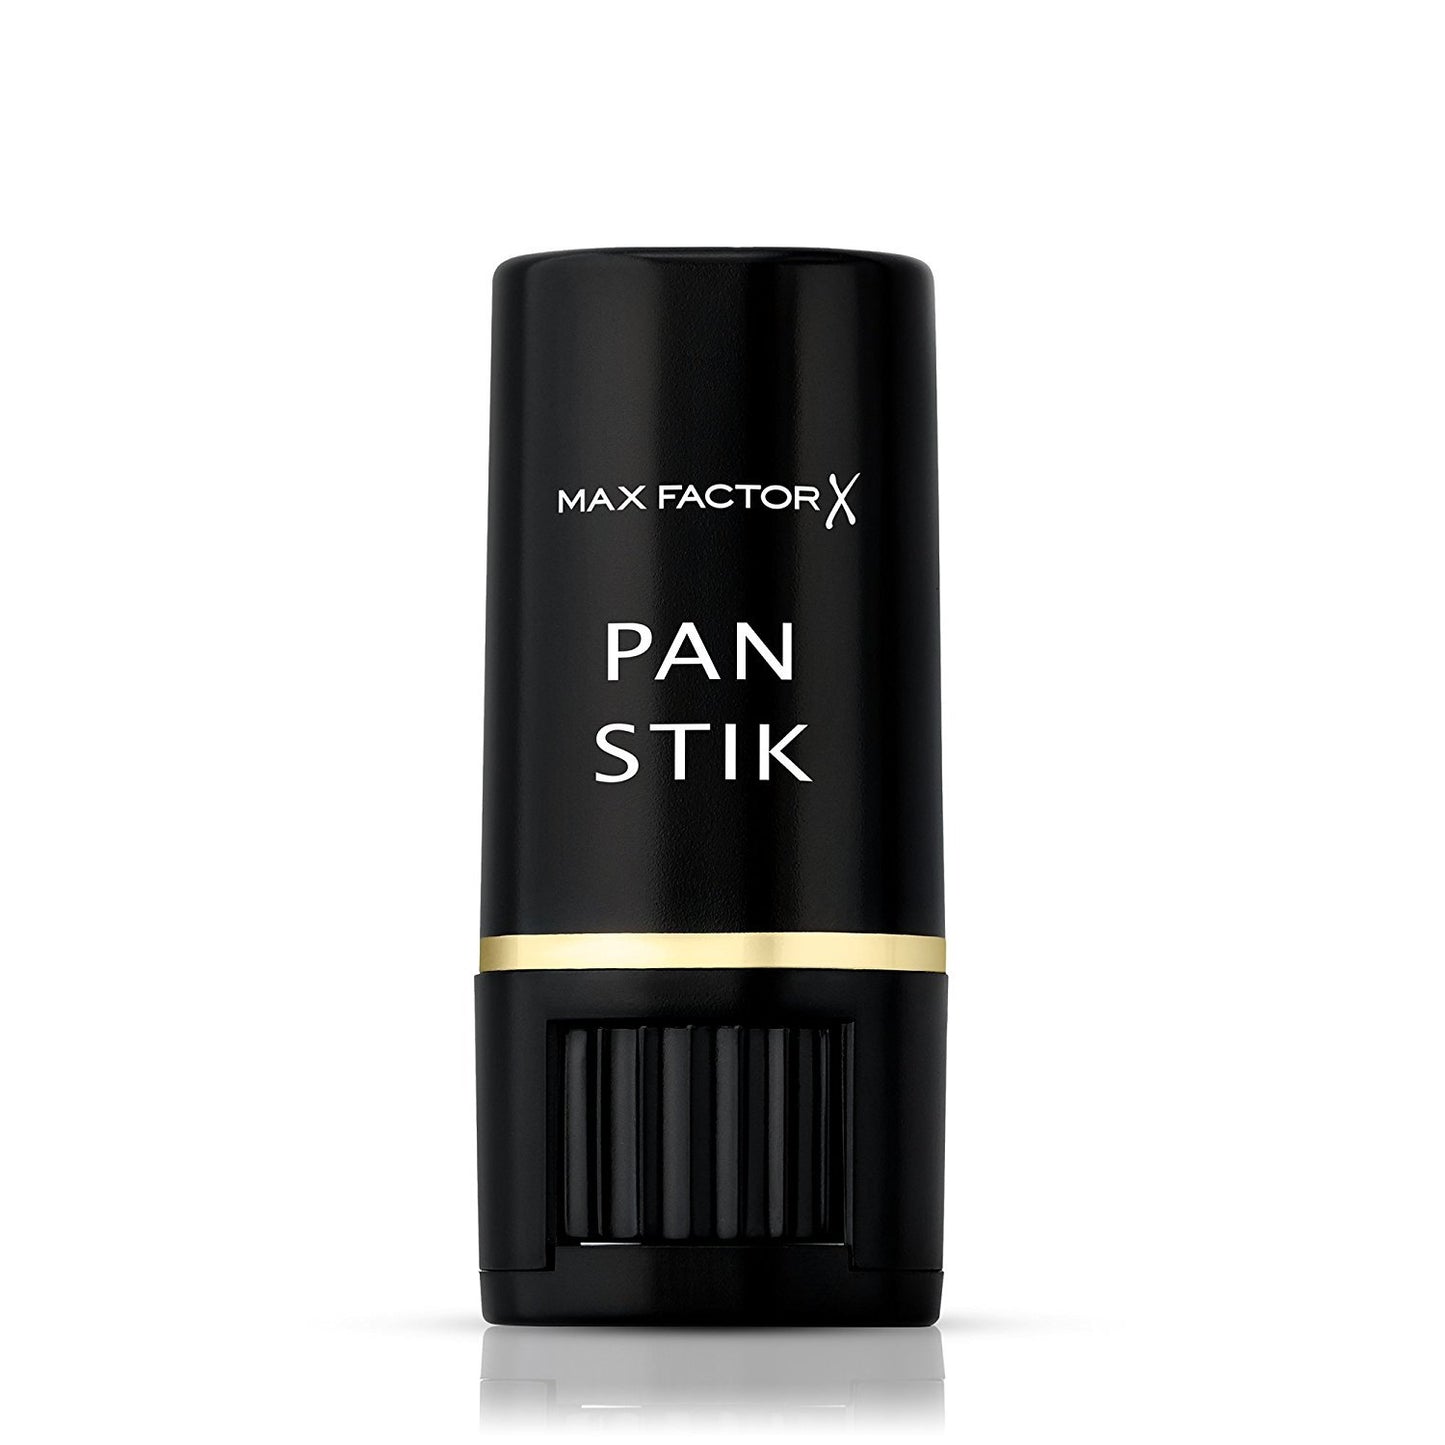 Max Factor Pan Stik Deep Olive 60 Foundation